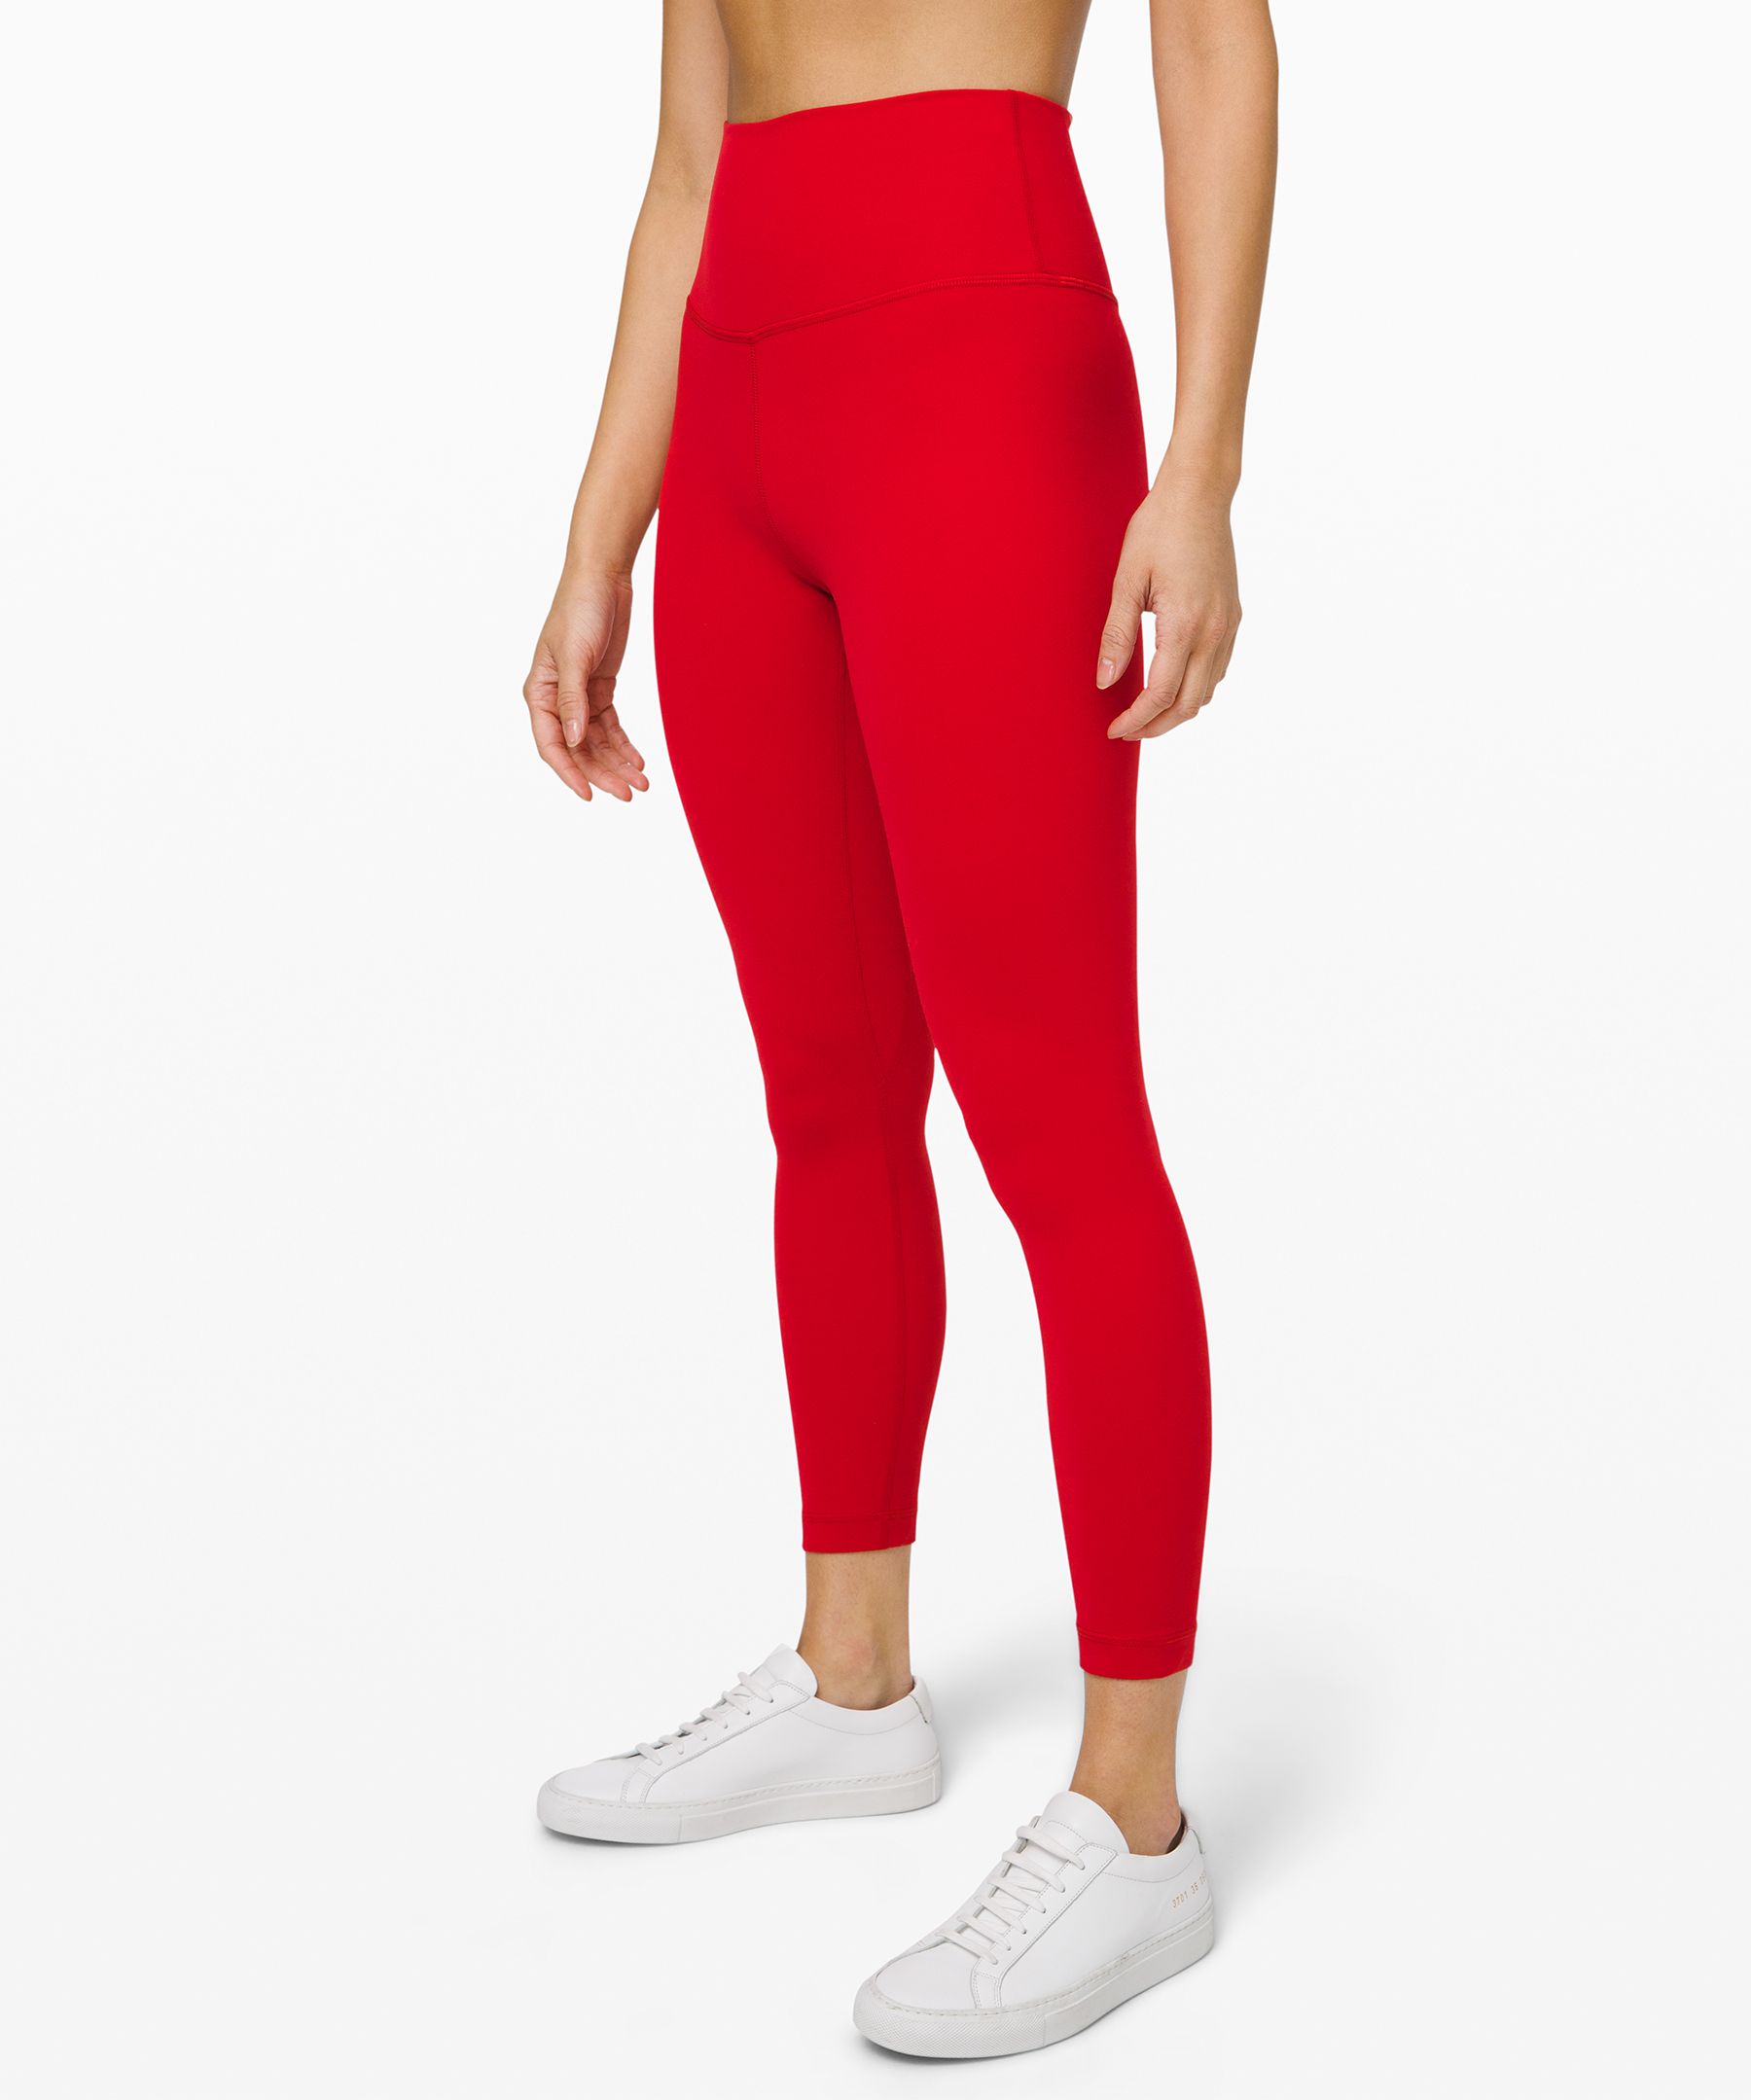 lululemon red align pants